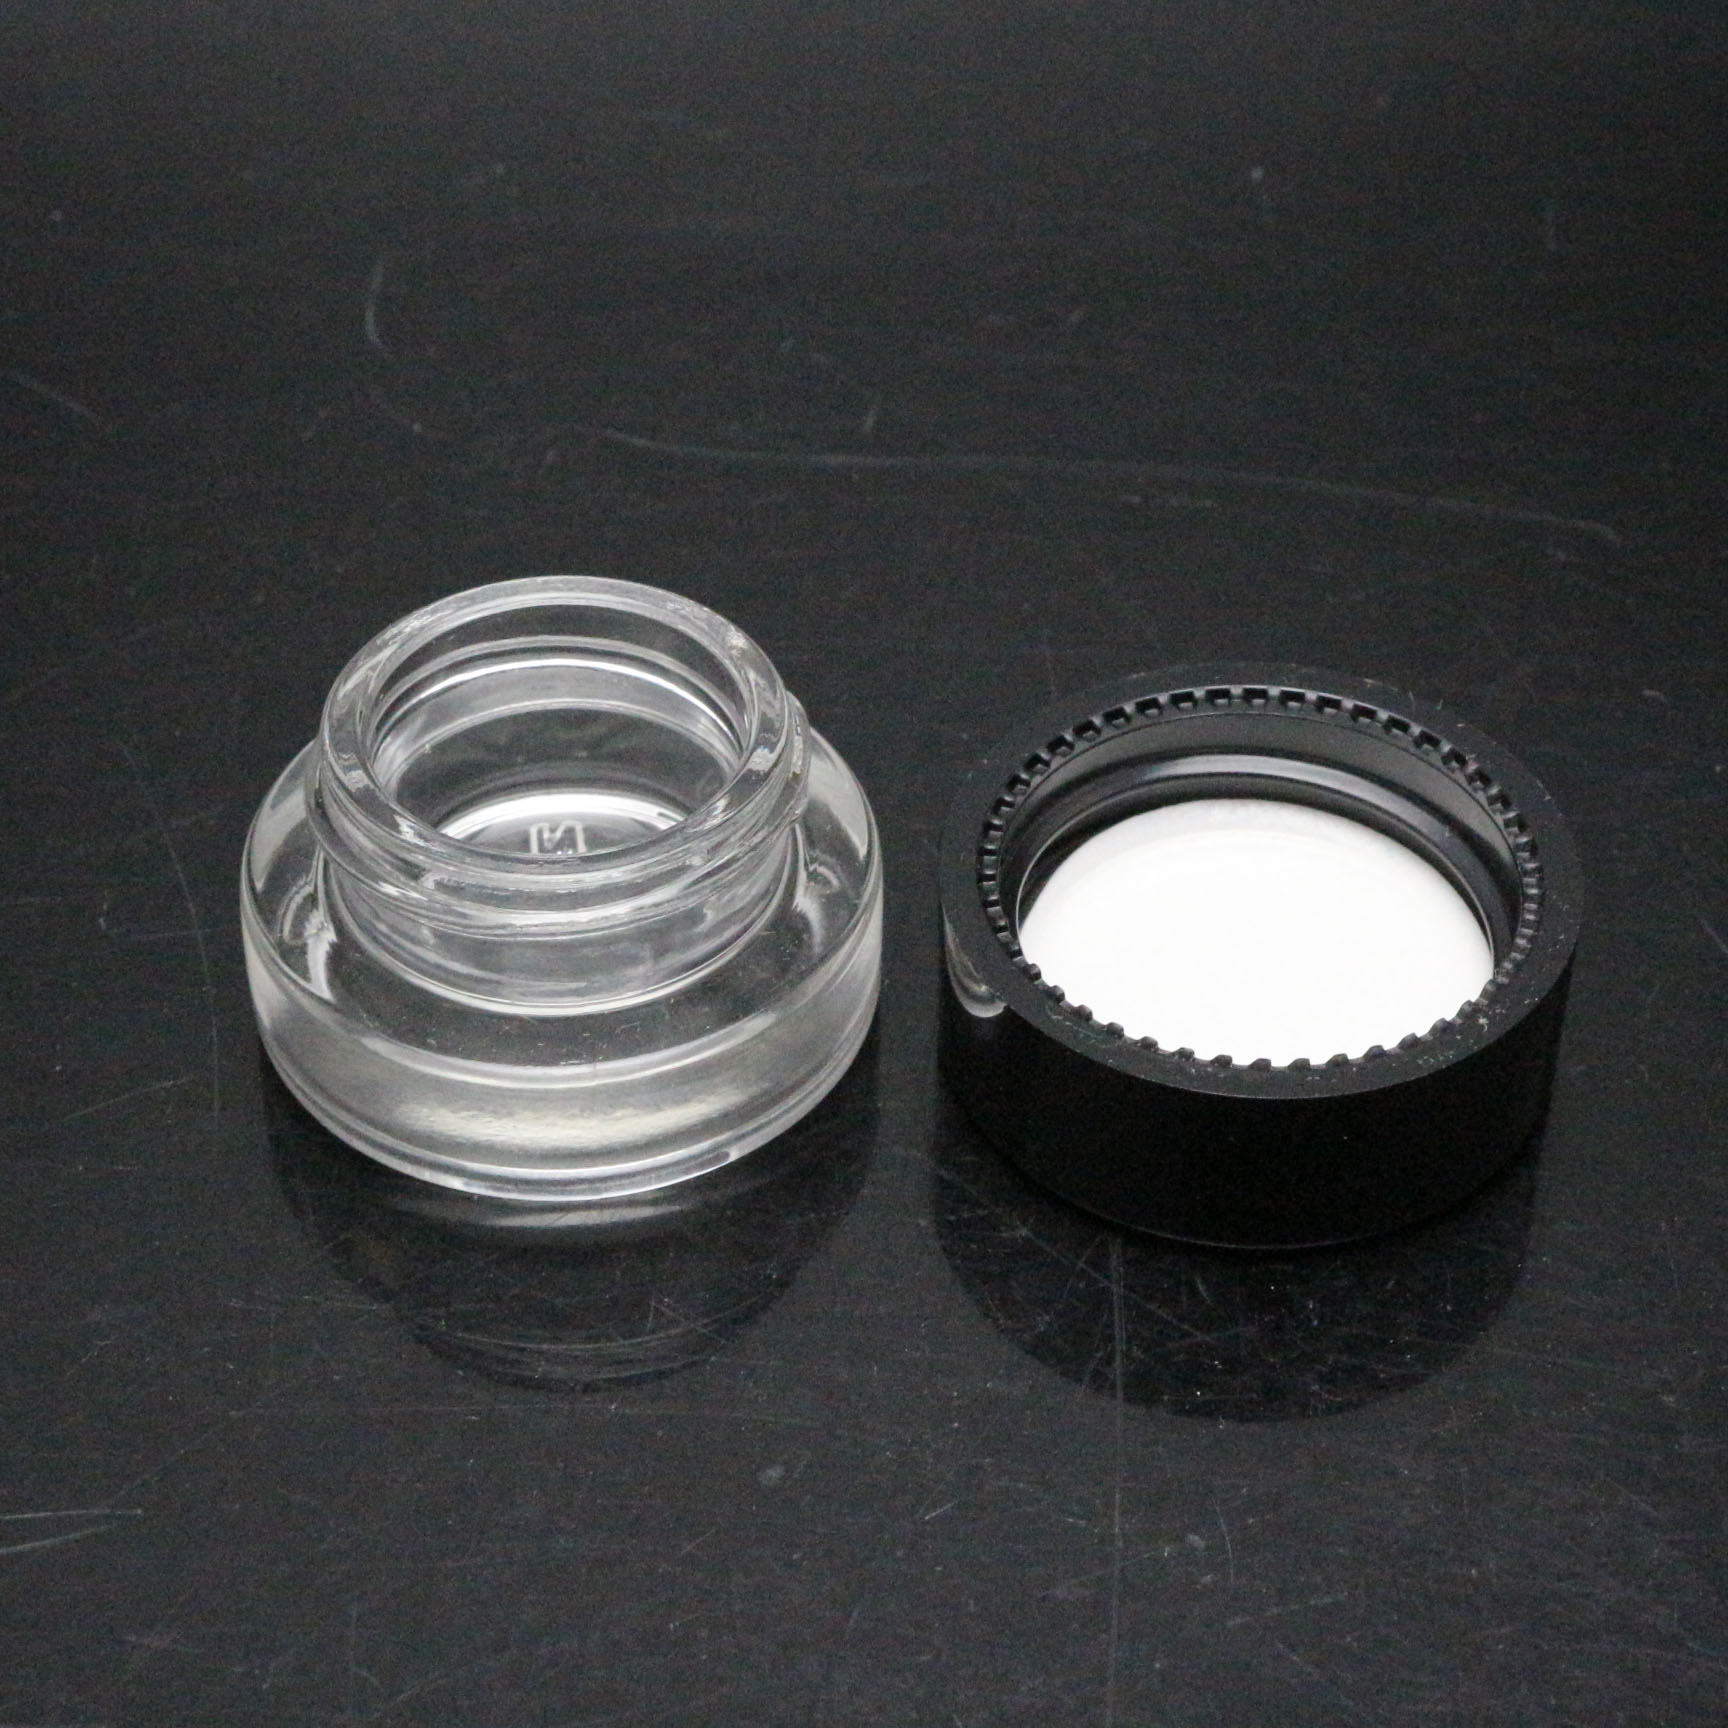 5ml glass jar with hard plastic cap